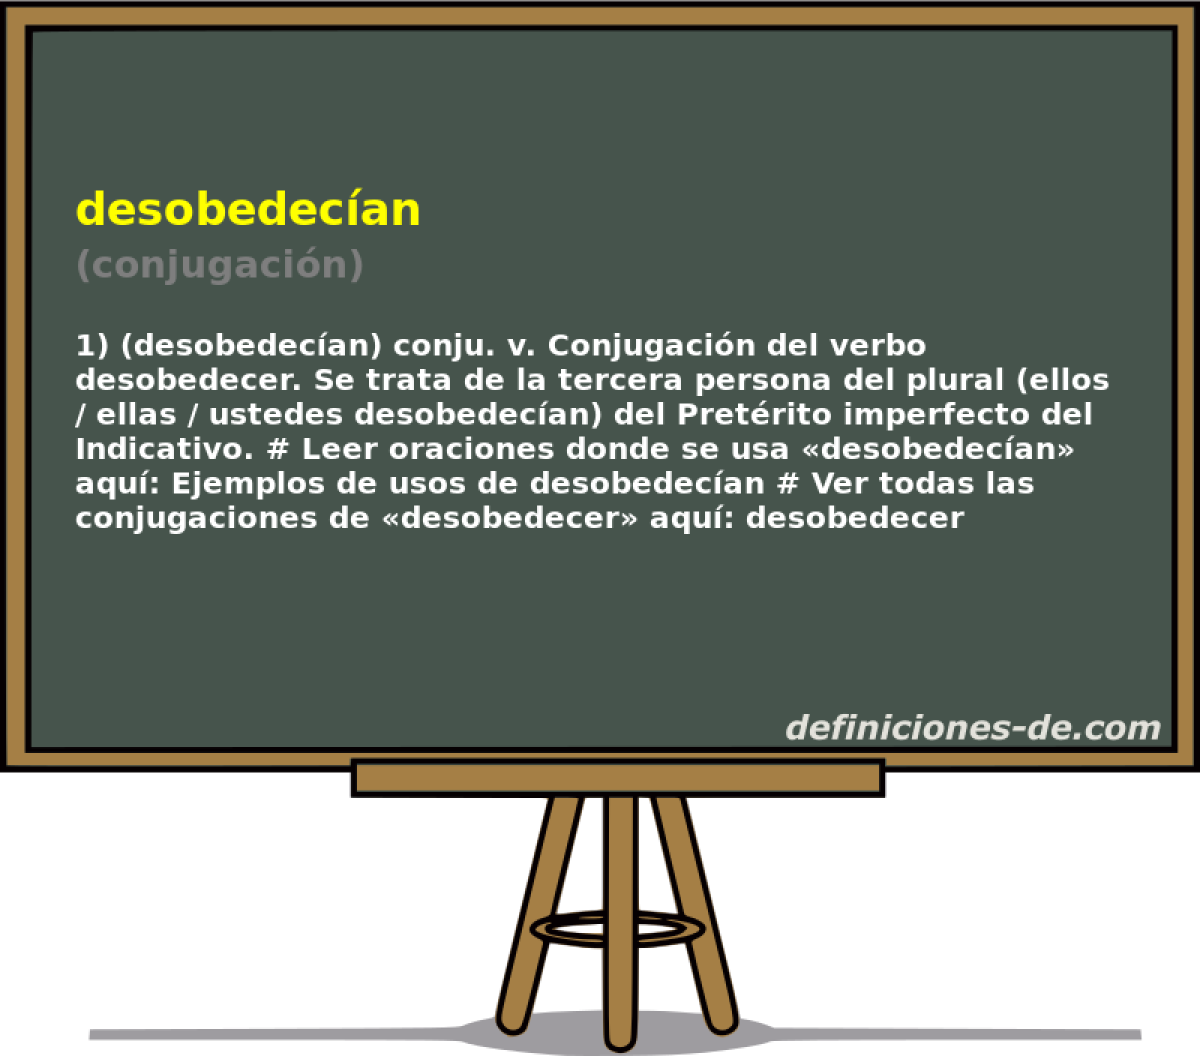 desobedecan (conjugacin)